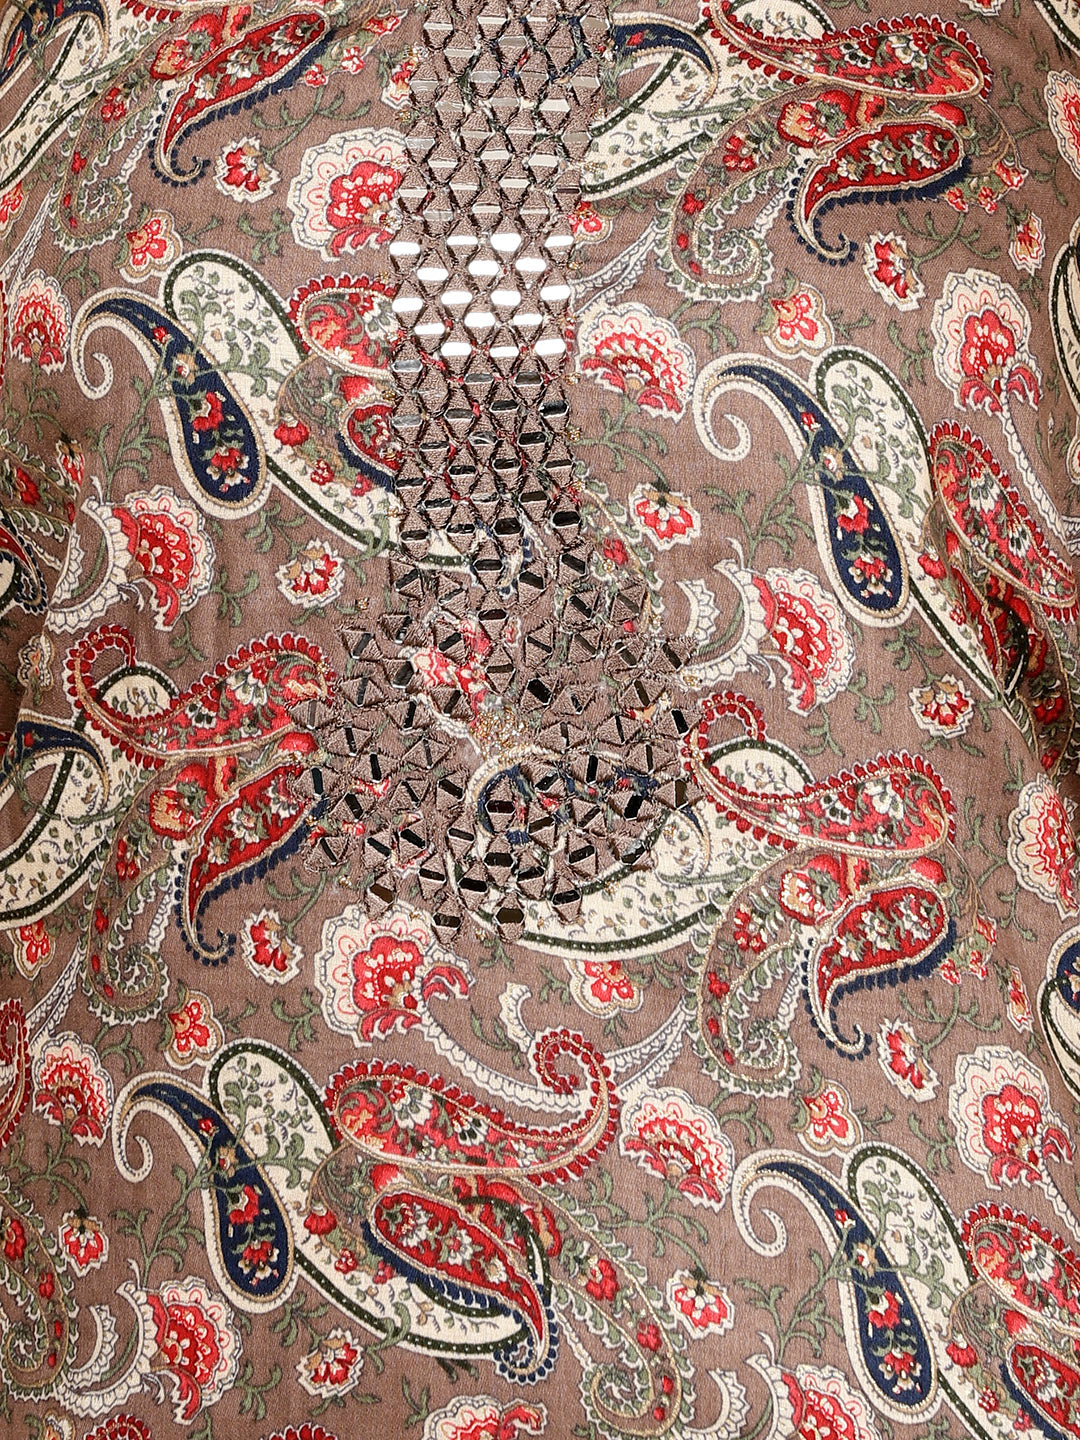 Printed Cotton Unstitched Suit Piece With Dupatta